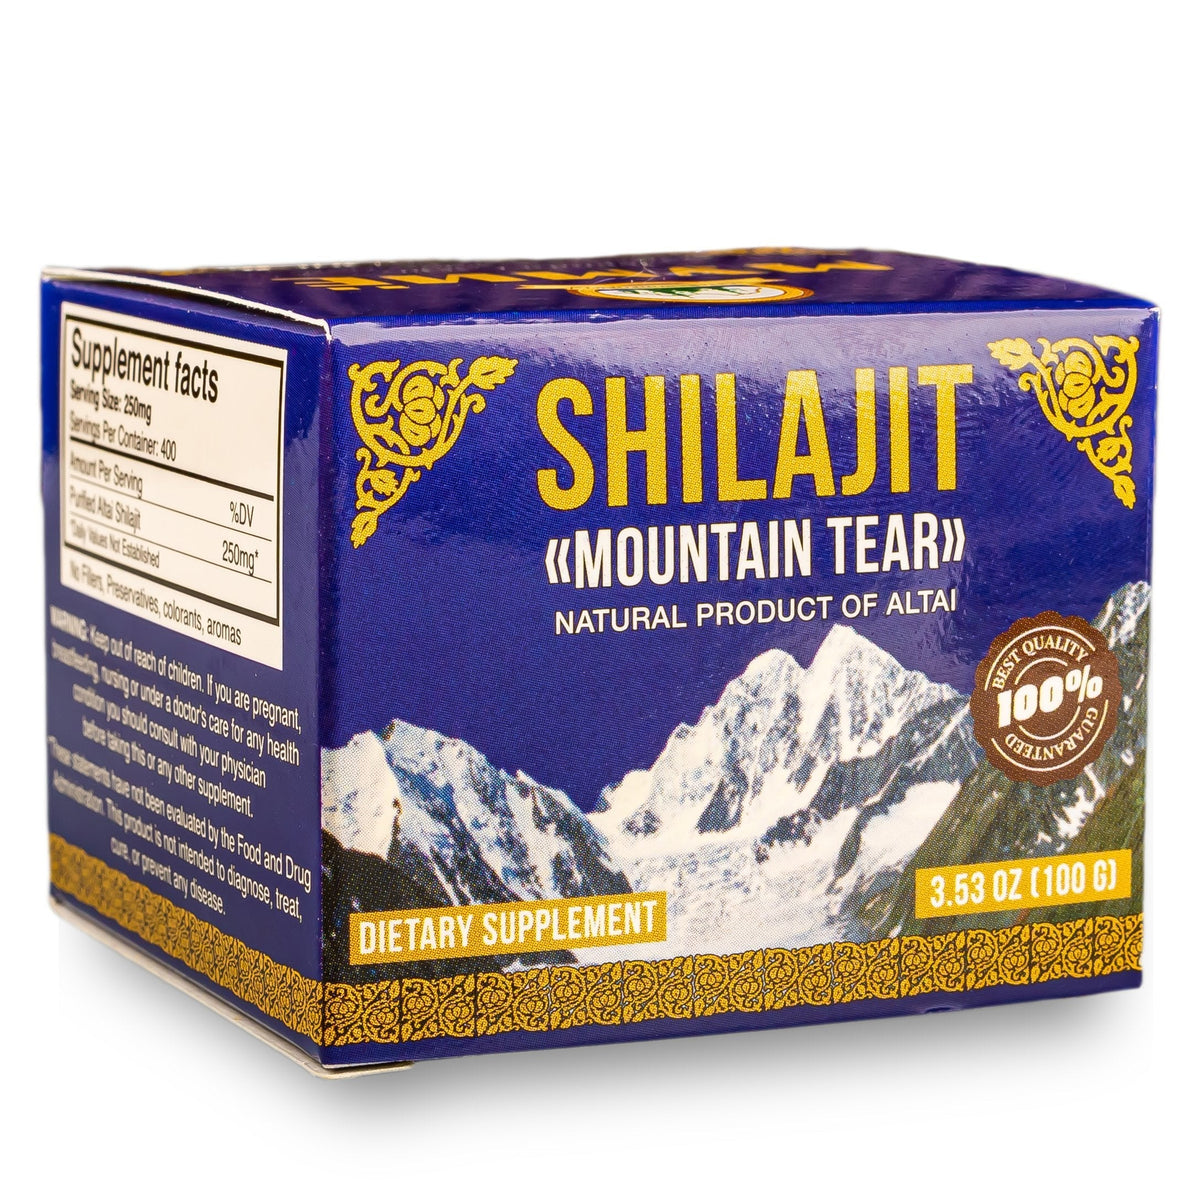 "Mountain Tear" Altai Pure Premium Shilajit Mumijo Resin Siberia 100g (3,4 oz)